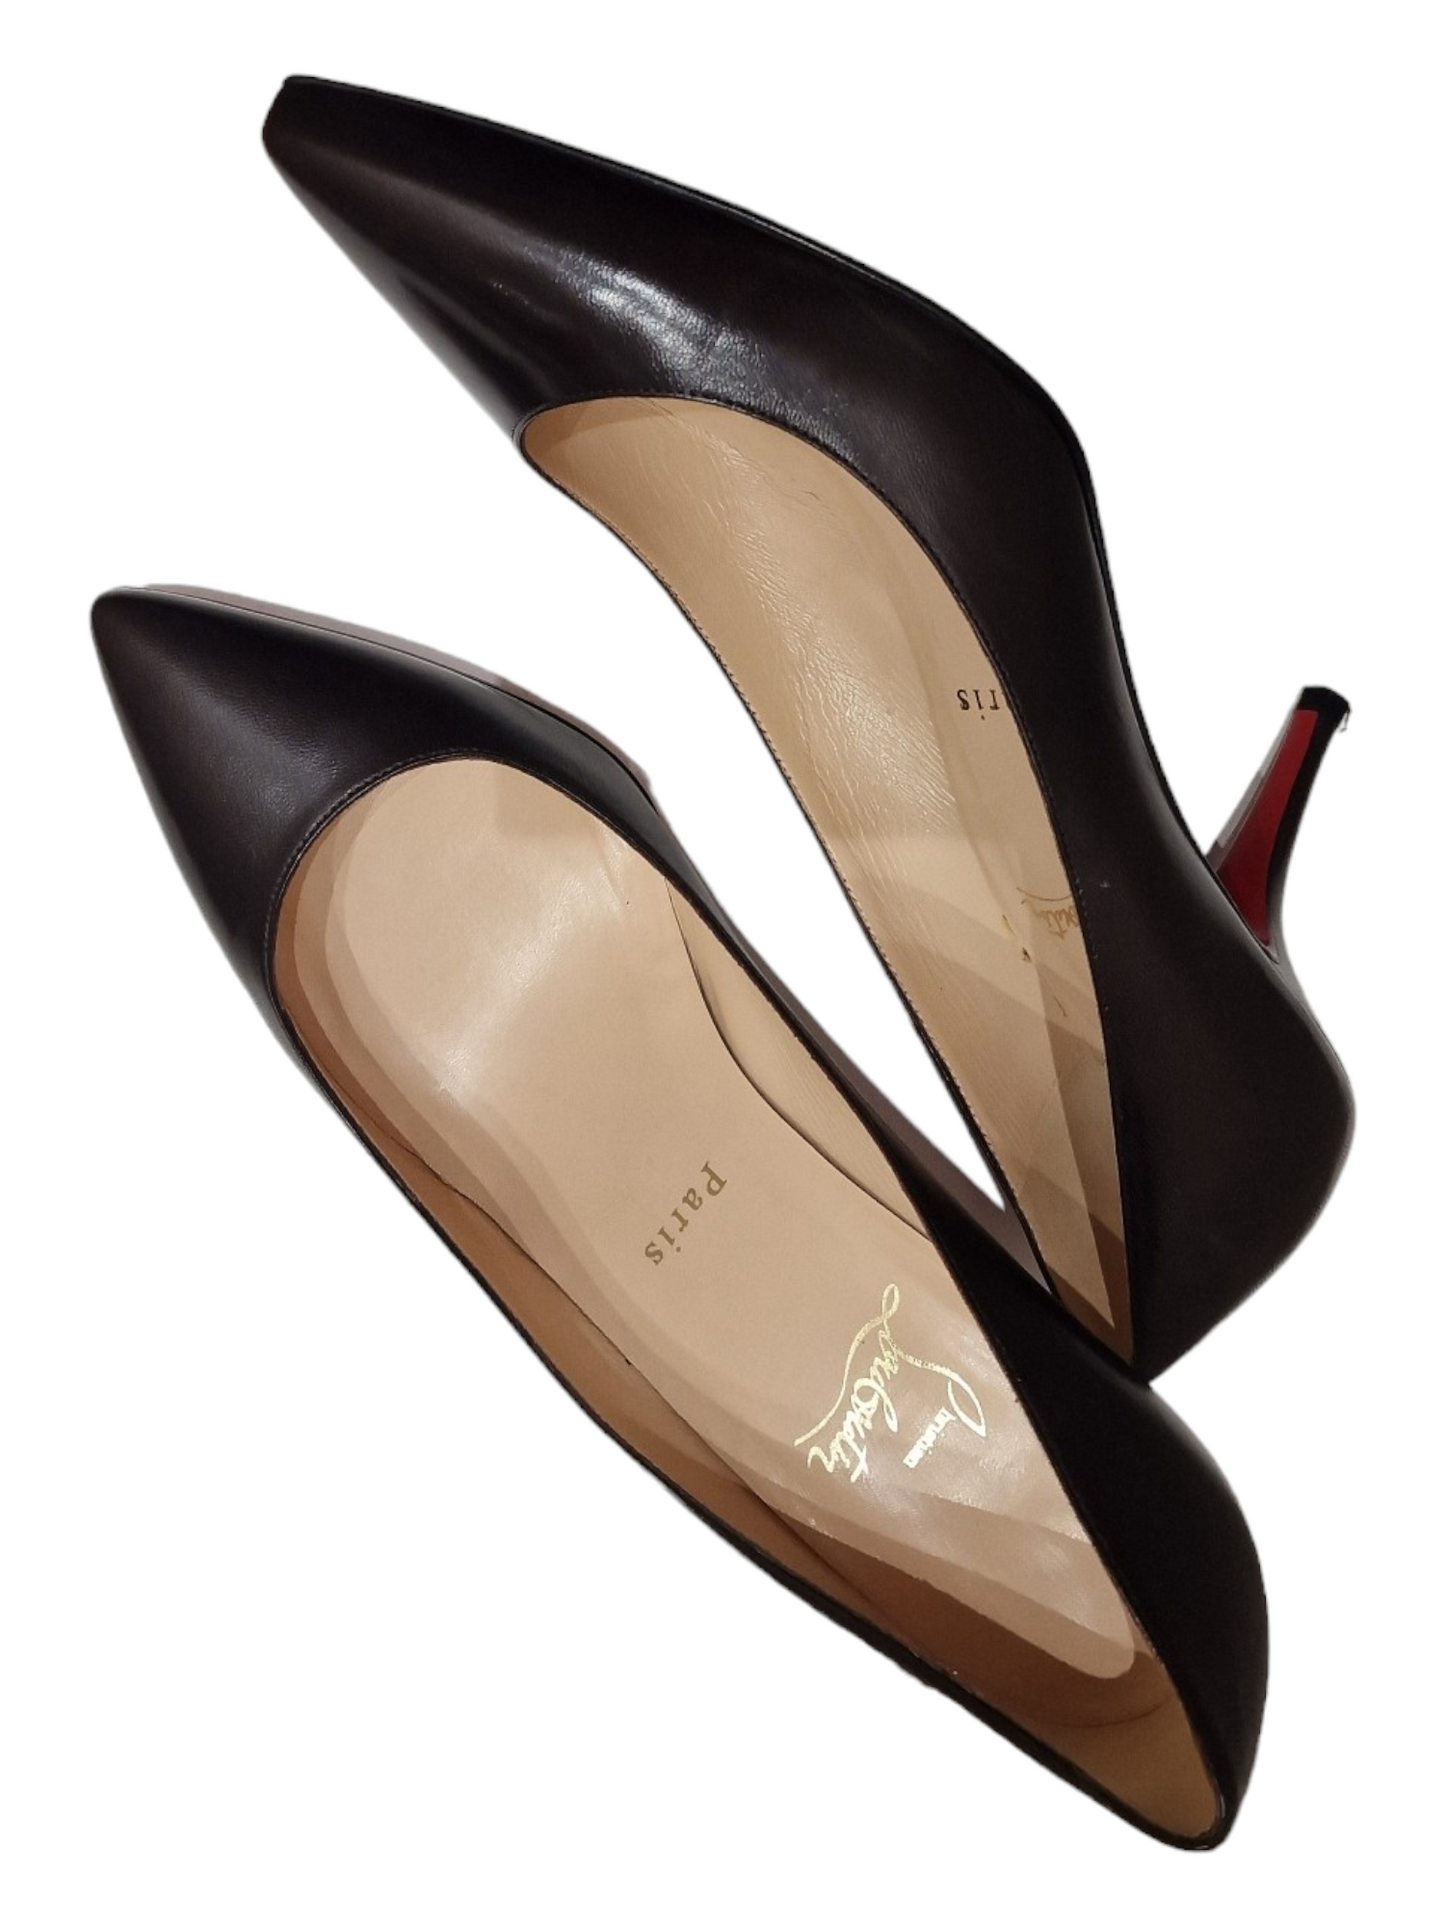 Louboutin heels, chocolate brown, size 39/6